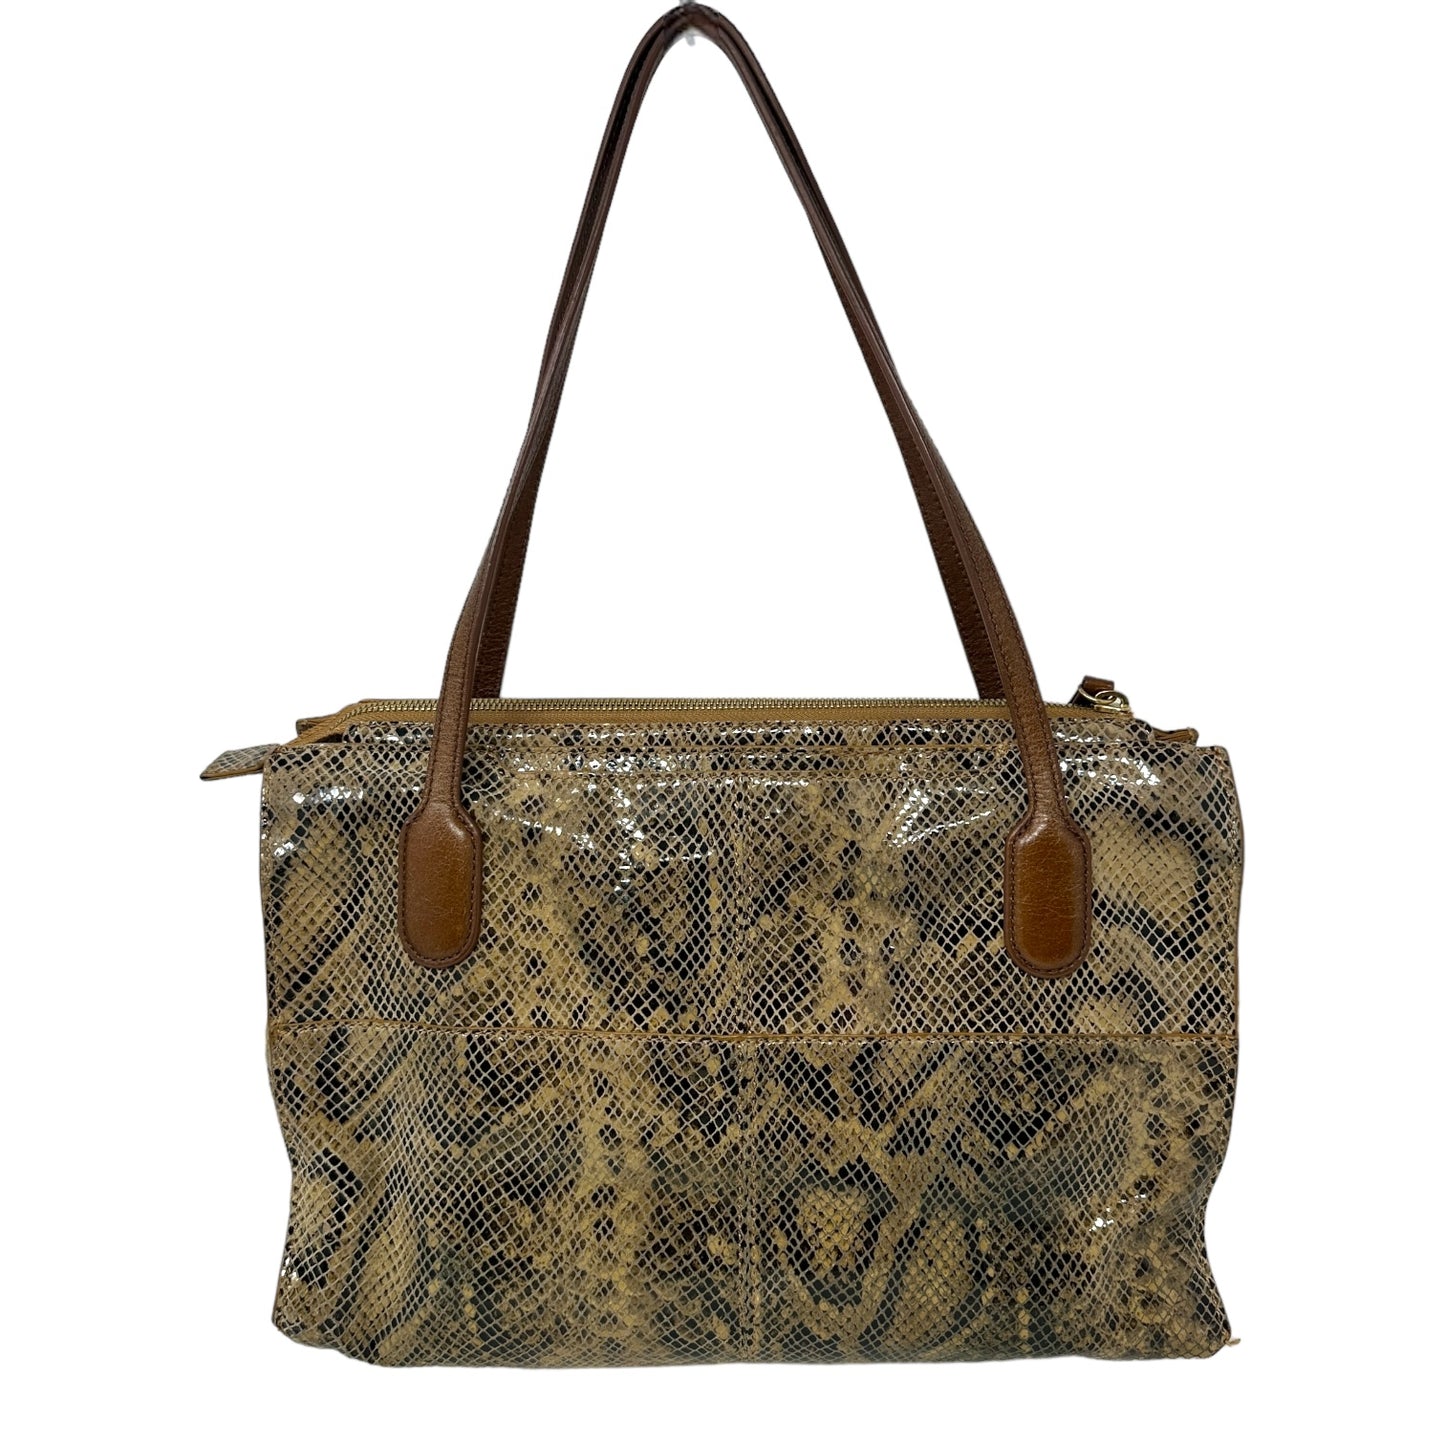 Friar Patterned Leather Handbag - Diamond Snake By Hobo Intl  Size: Medium